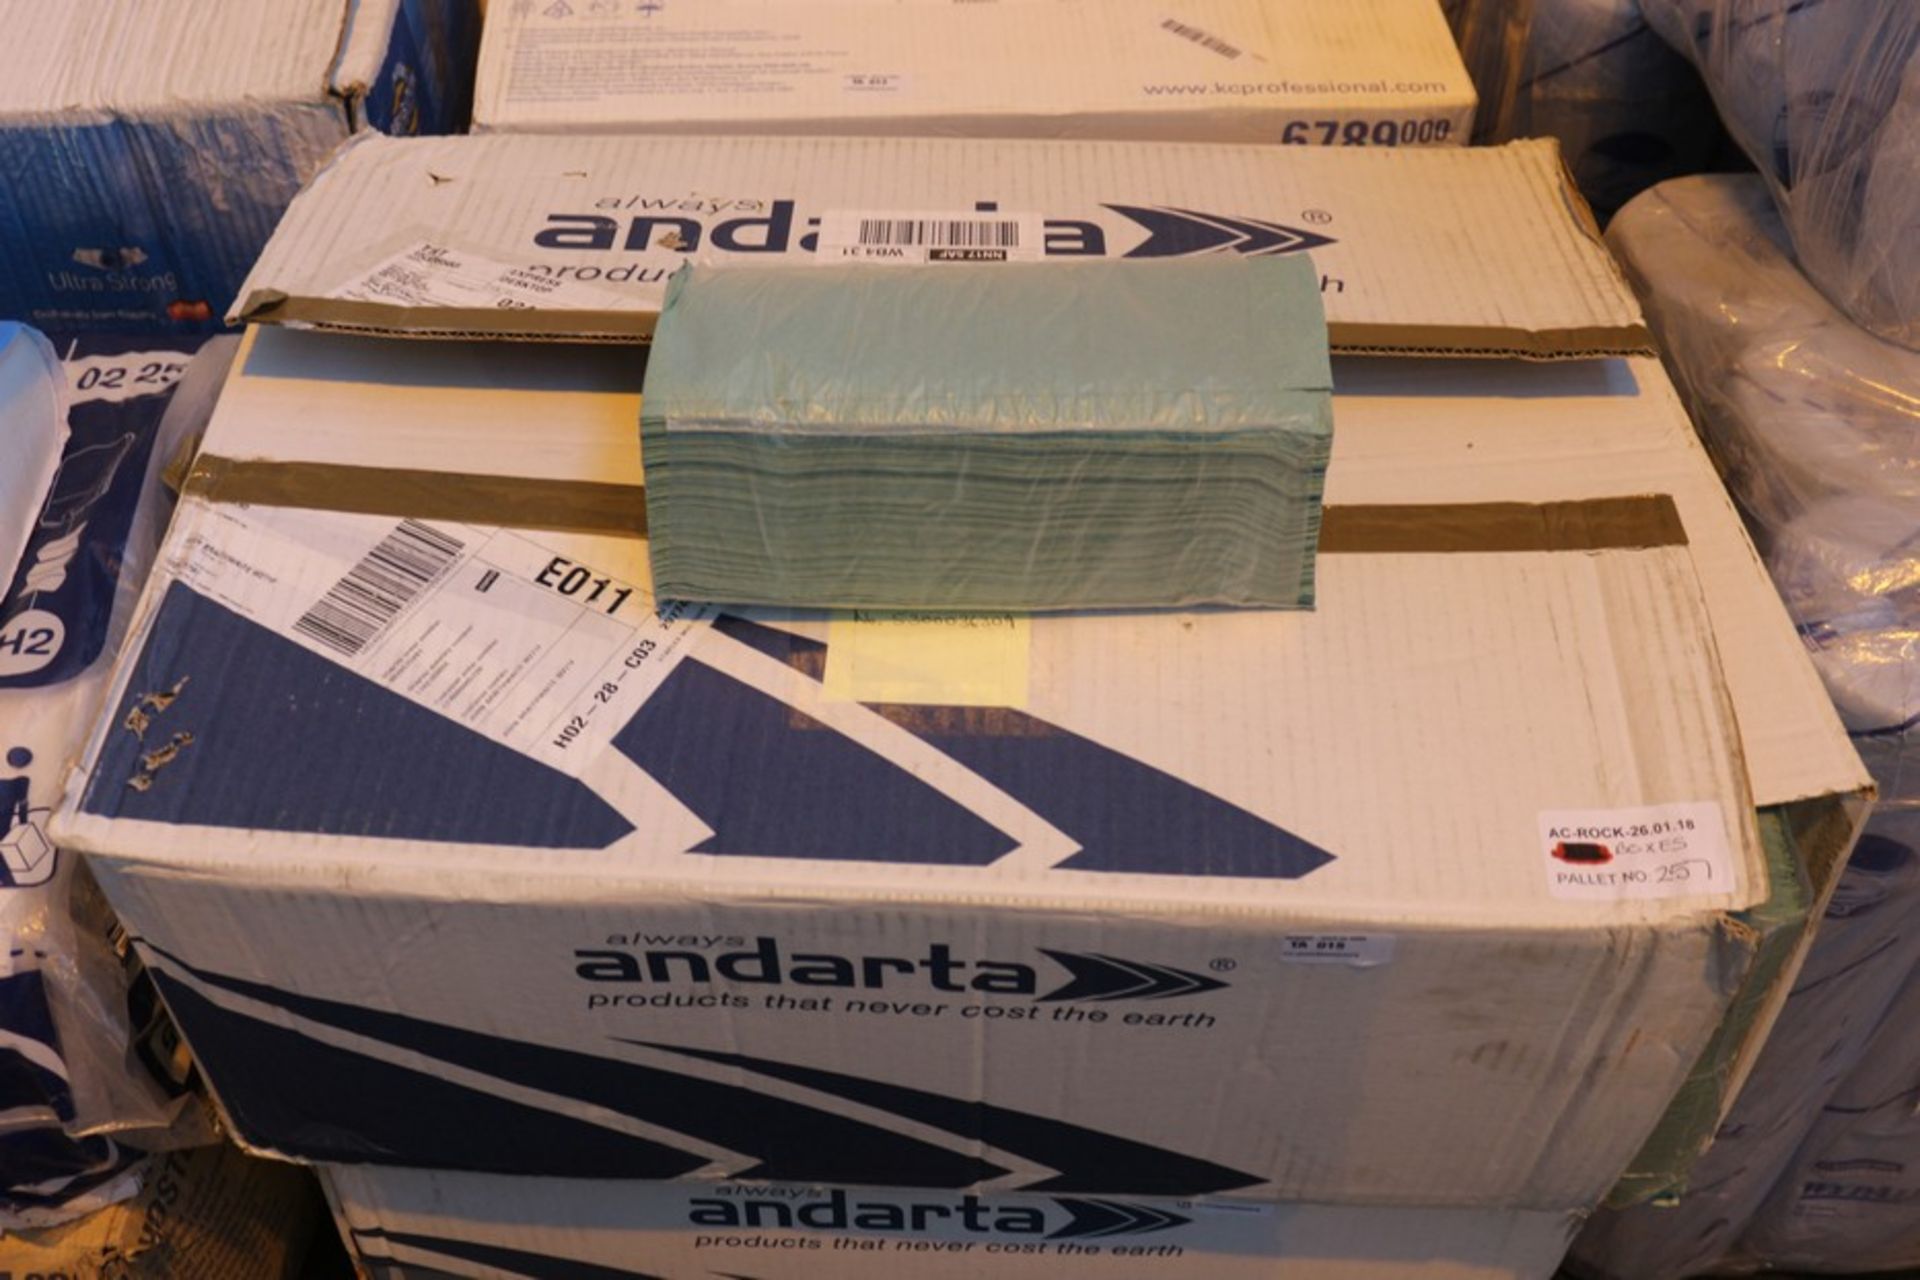 1X BOX OF ANDARTA HAND TOWELS (AC-ROCK) (26.01.18) (PALLET.257)